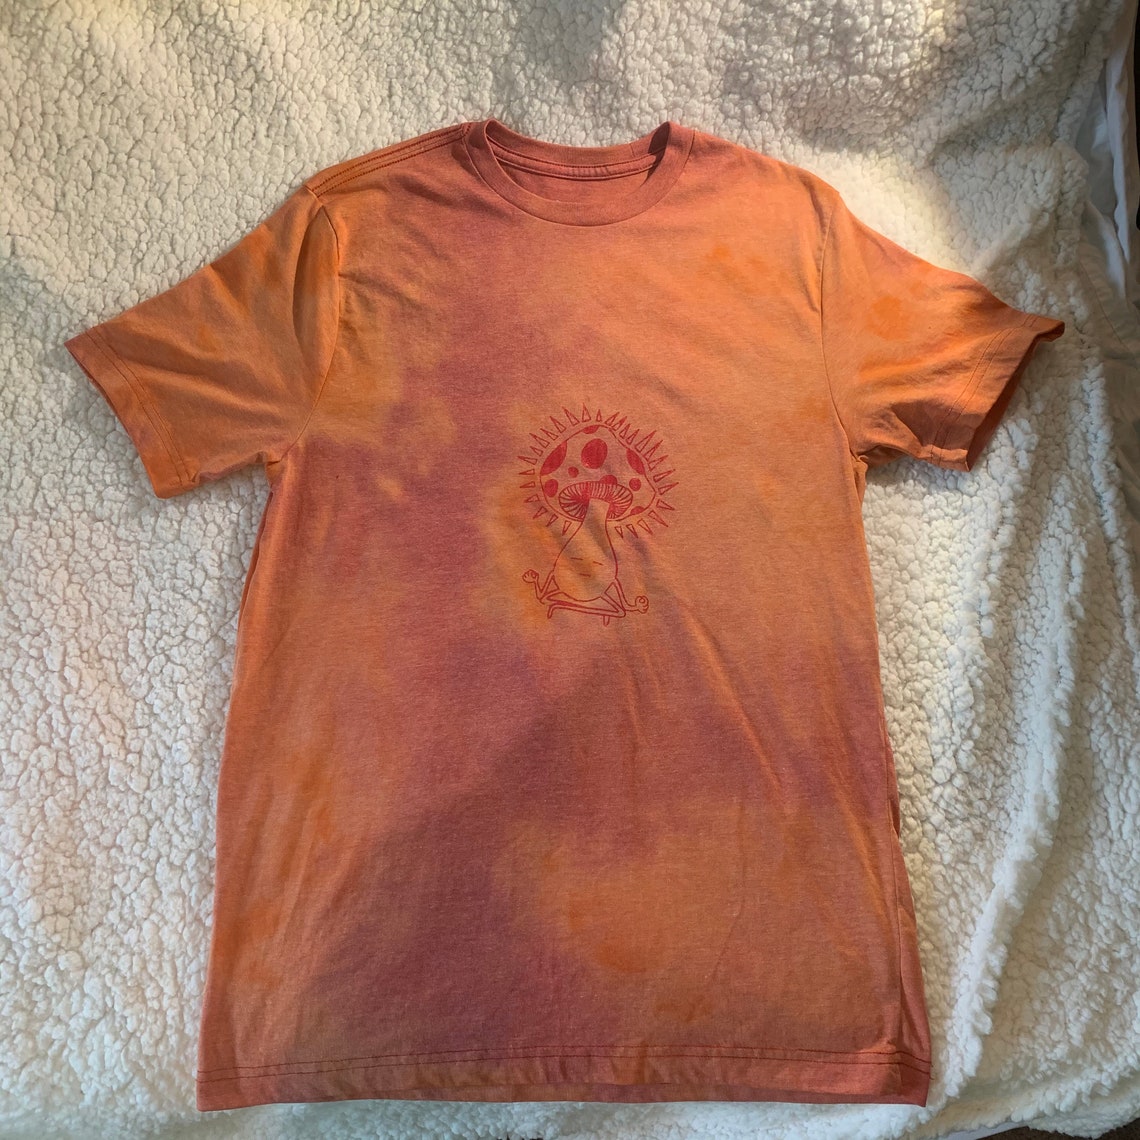 Bleach tie-dye and screen printing t shirt | Etsy Can You Bleach A Screen Printed Shirt